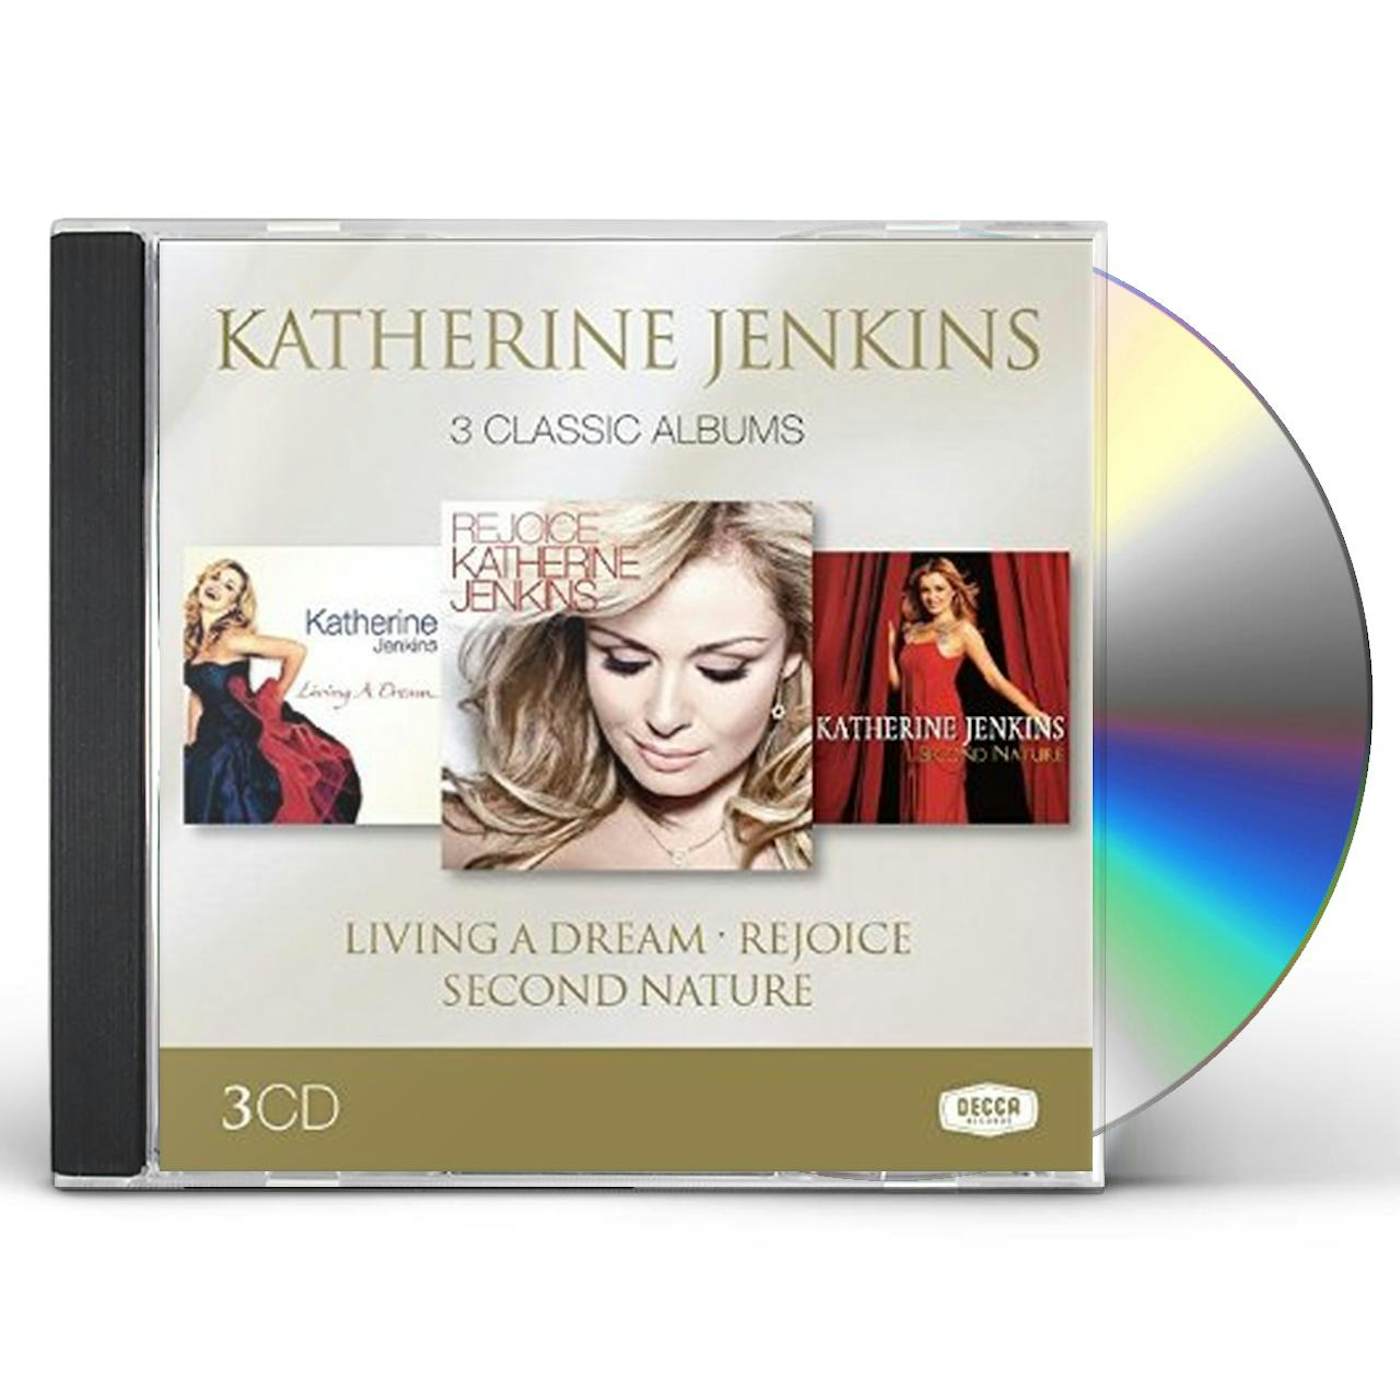 KATHERINE JENKINS: 3 CLASSIC ALBUMS CD